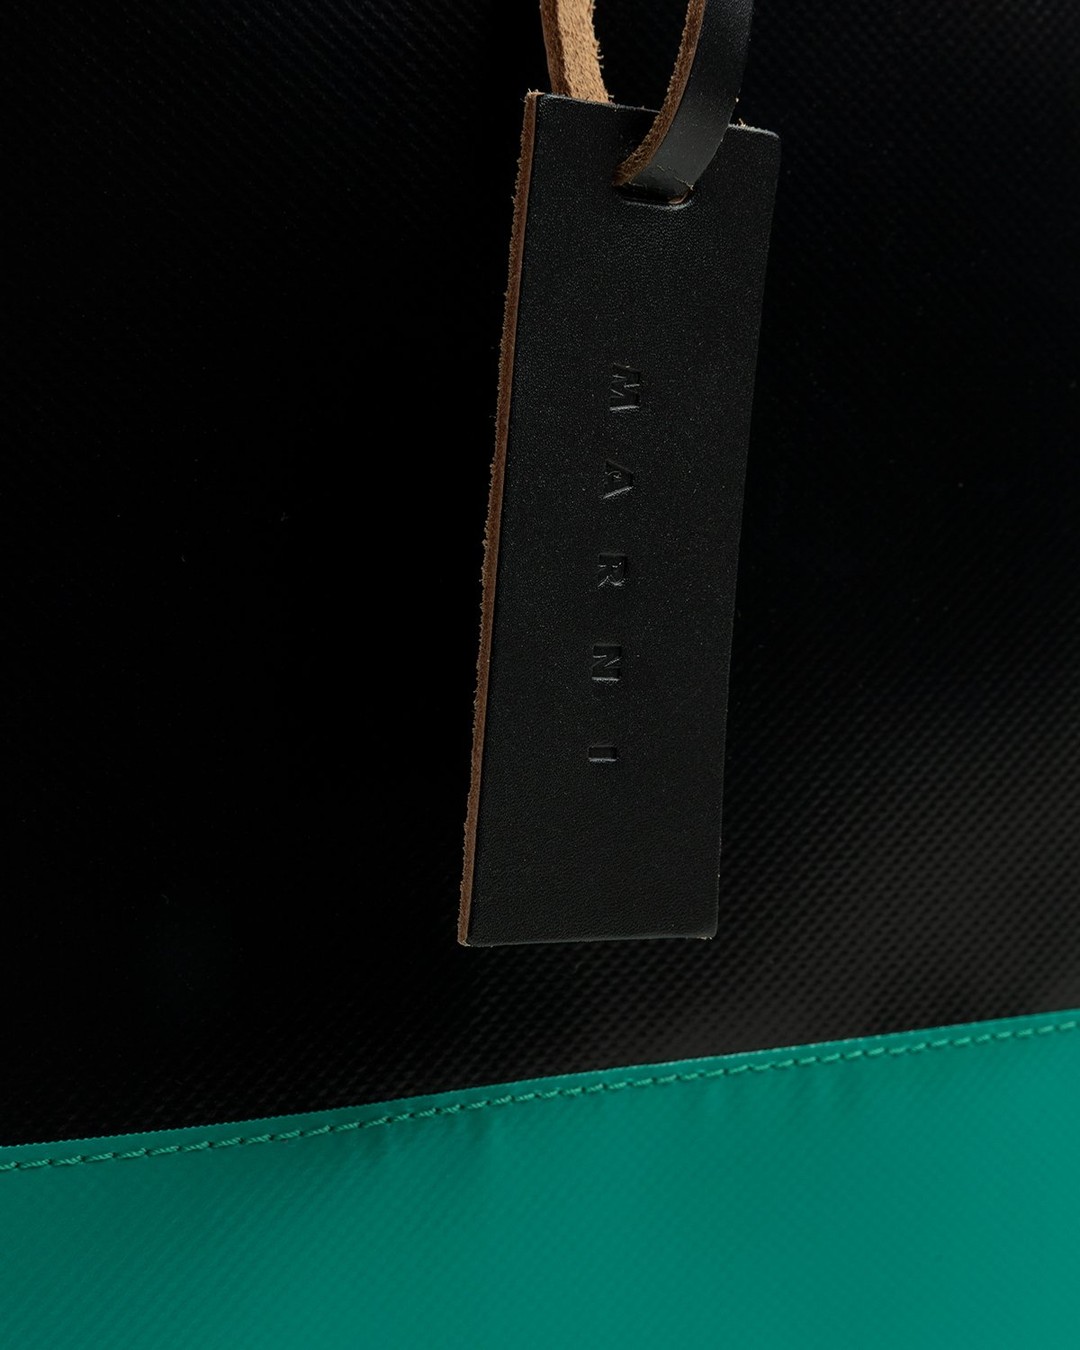 Marni – Tribeca Two-Tone Tote Bag Black/Green - Tote Bags - Black - Image 4